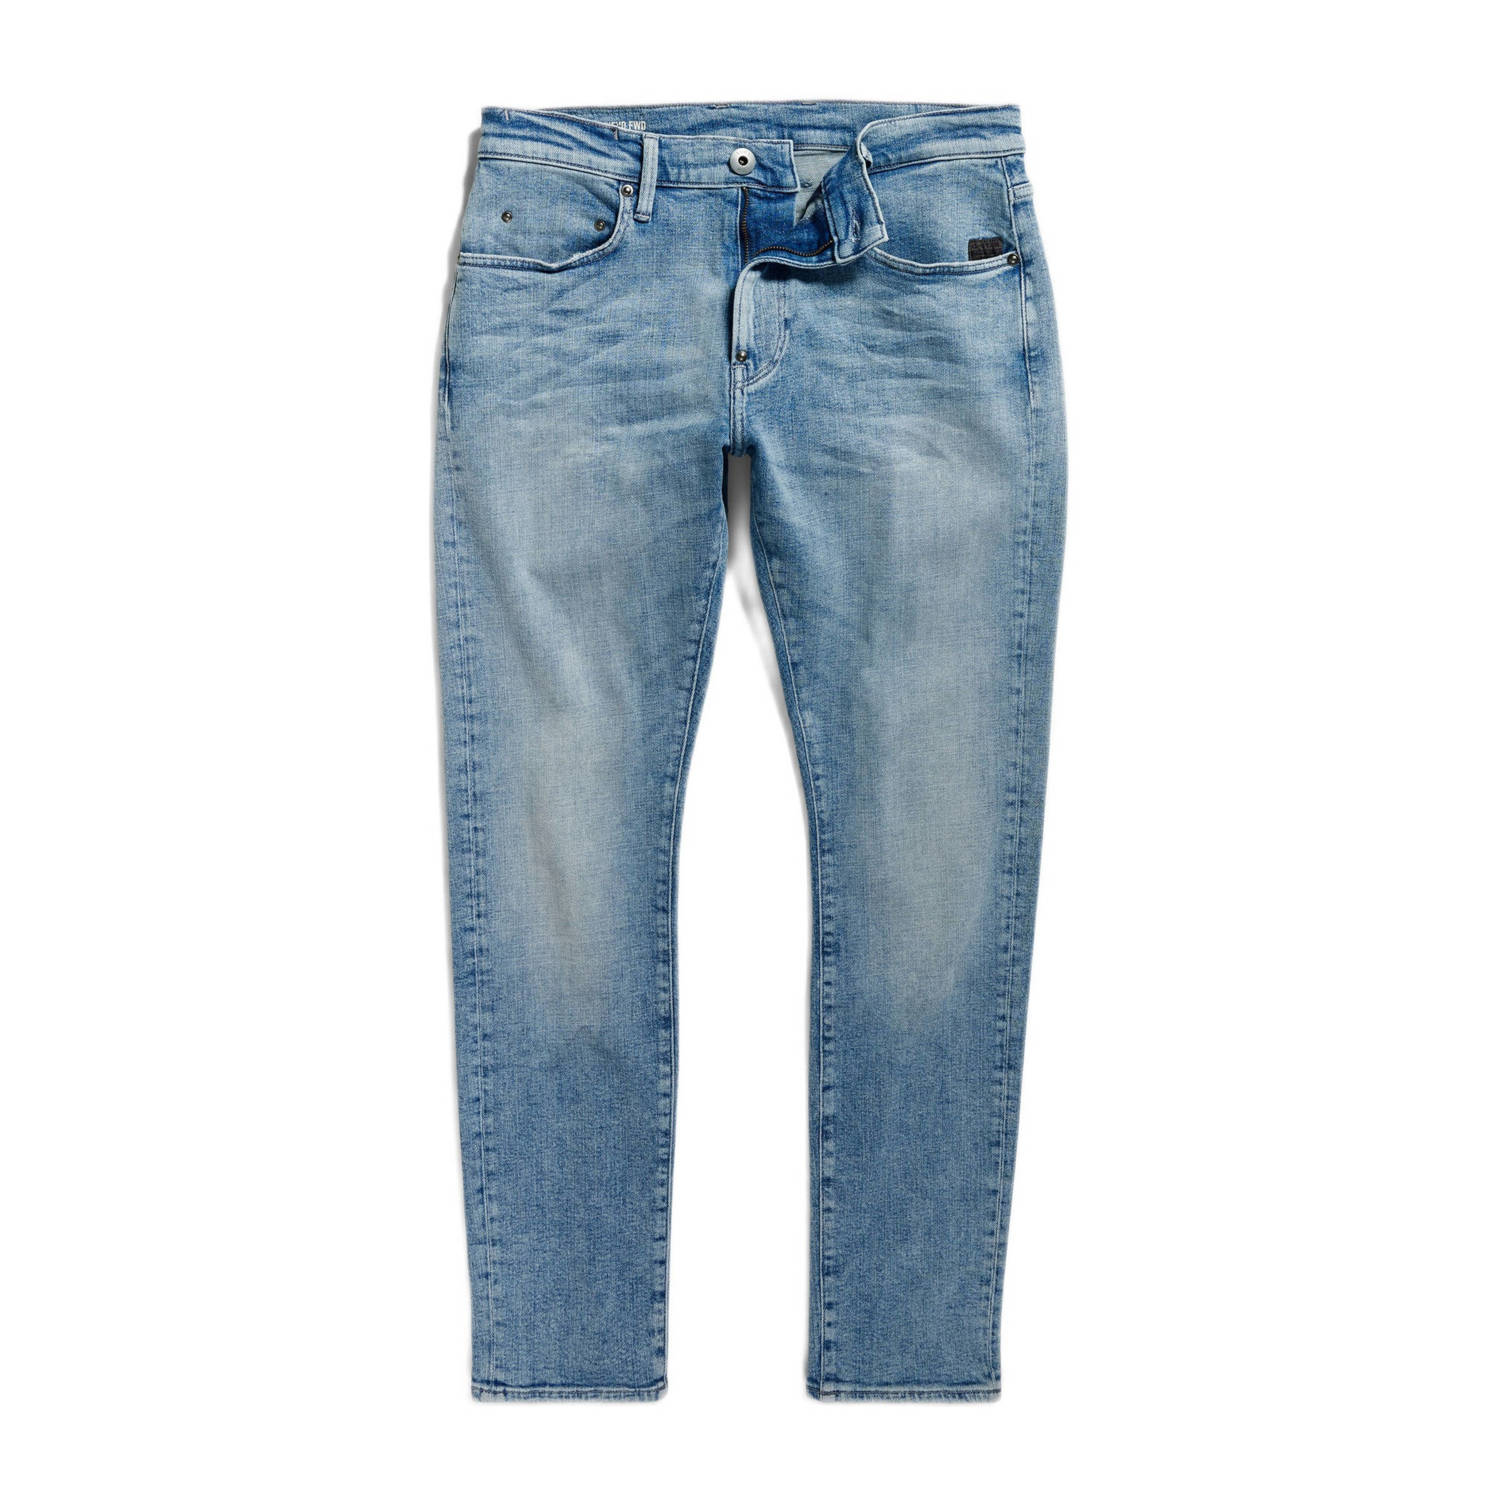 G-Star RAW Revend FWD skinny jeans sun faded nubay blue